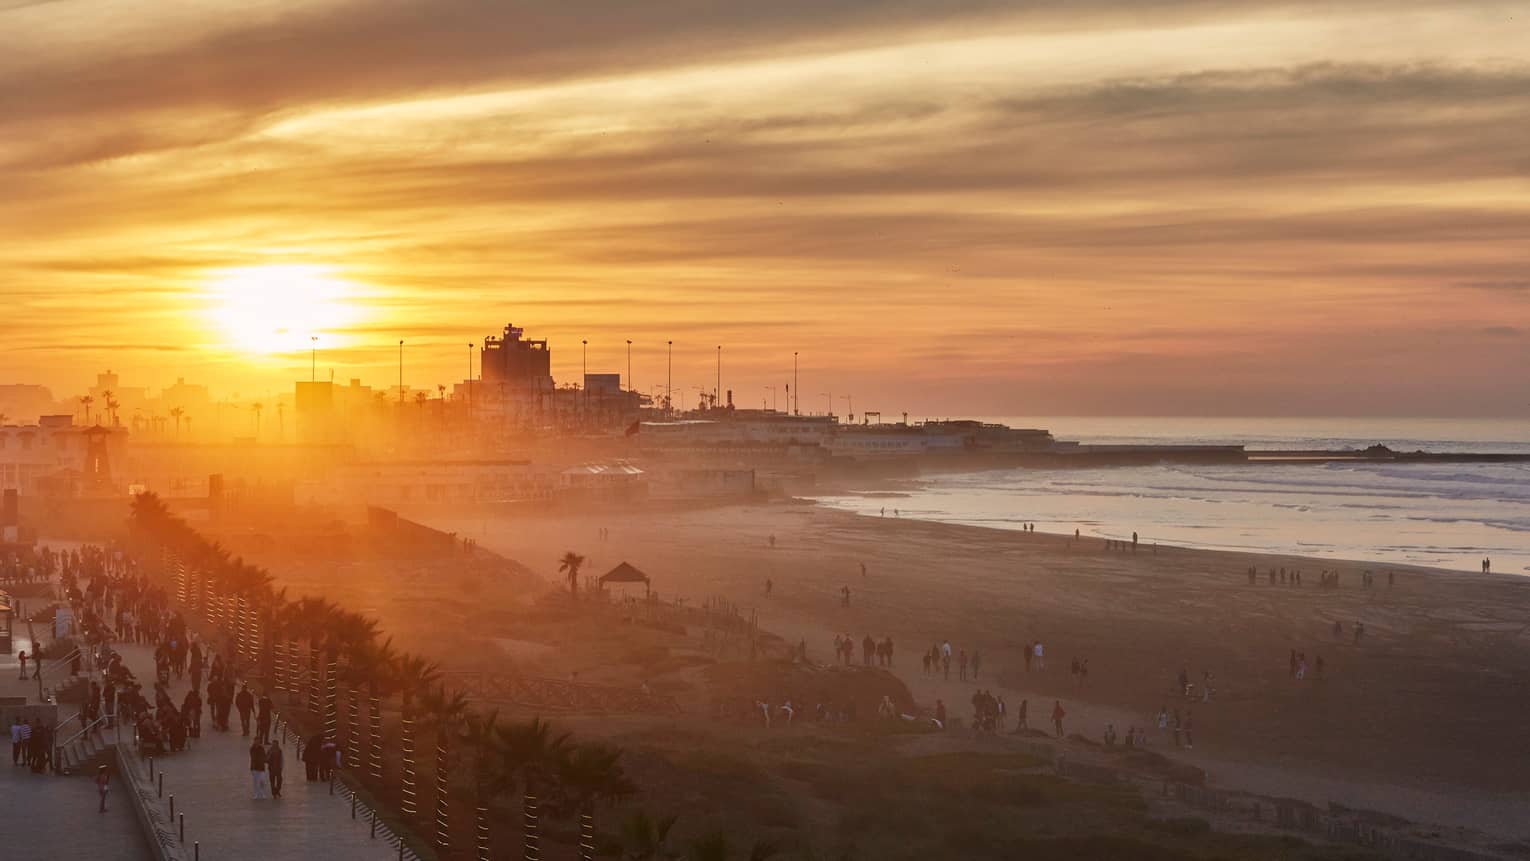 Orange sunset over Casablanca beach, silhouettes of people walking along boardwalk